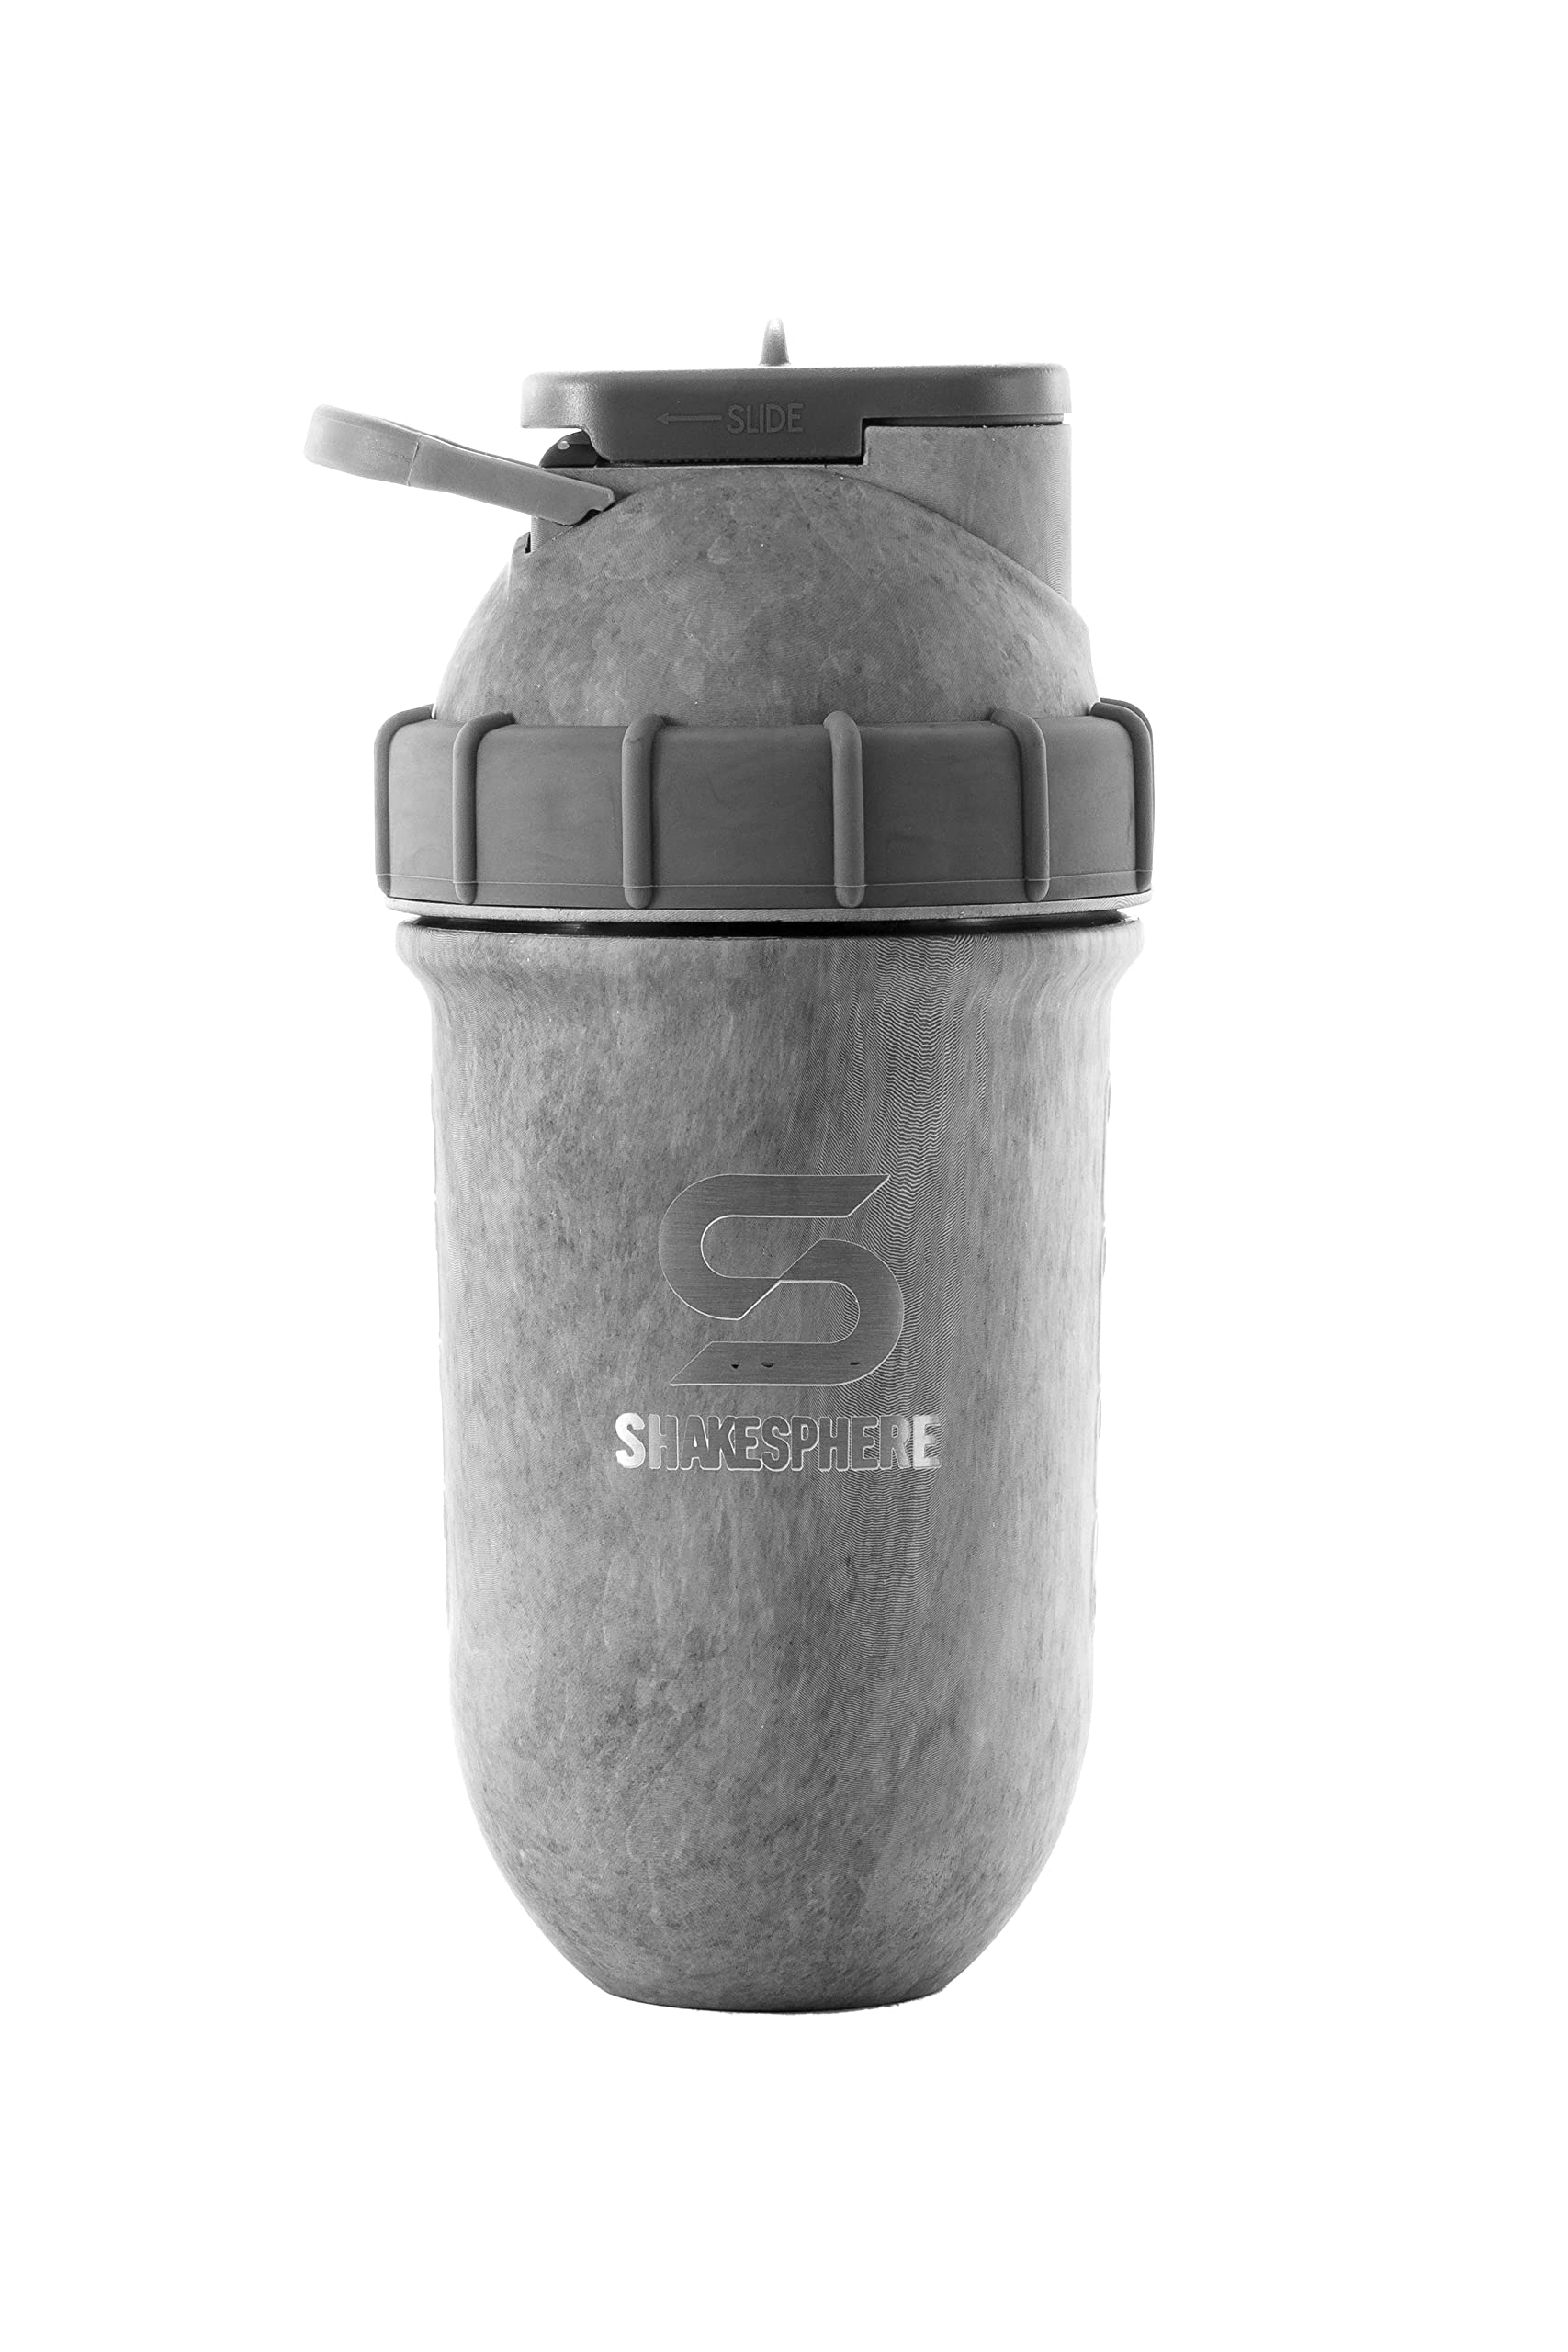 SHAKESPHERE Tumbler STEEL: Protein Shaker Bottle Keeps Hot Drinks HOT &  Cold Drinks COLD, 24 oz. No Blending Ball or Whisk Needed - Rose Gold Black